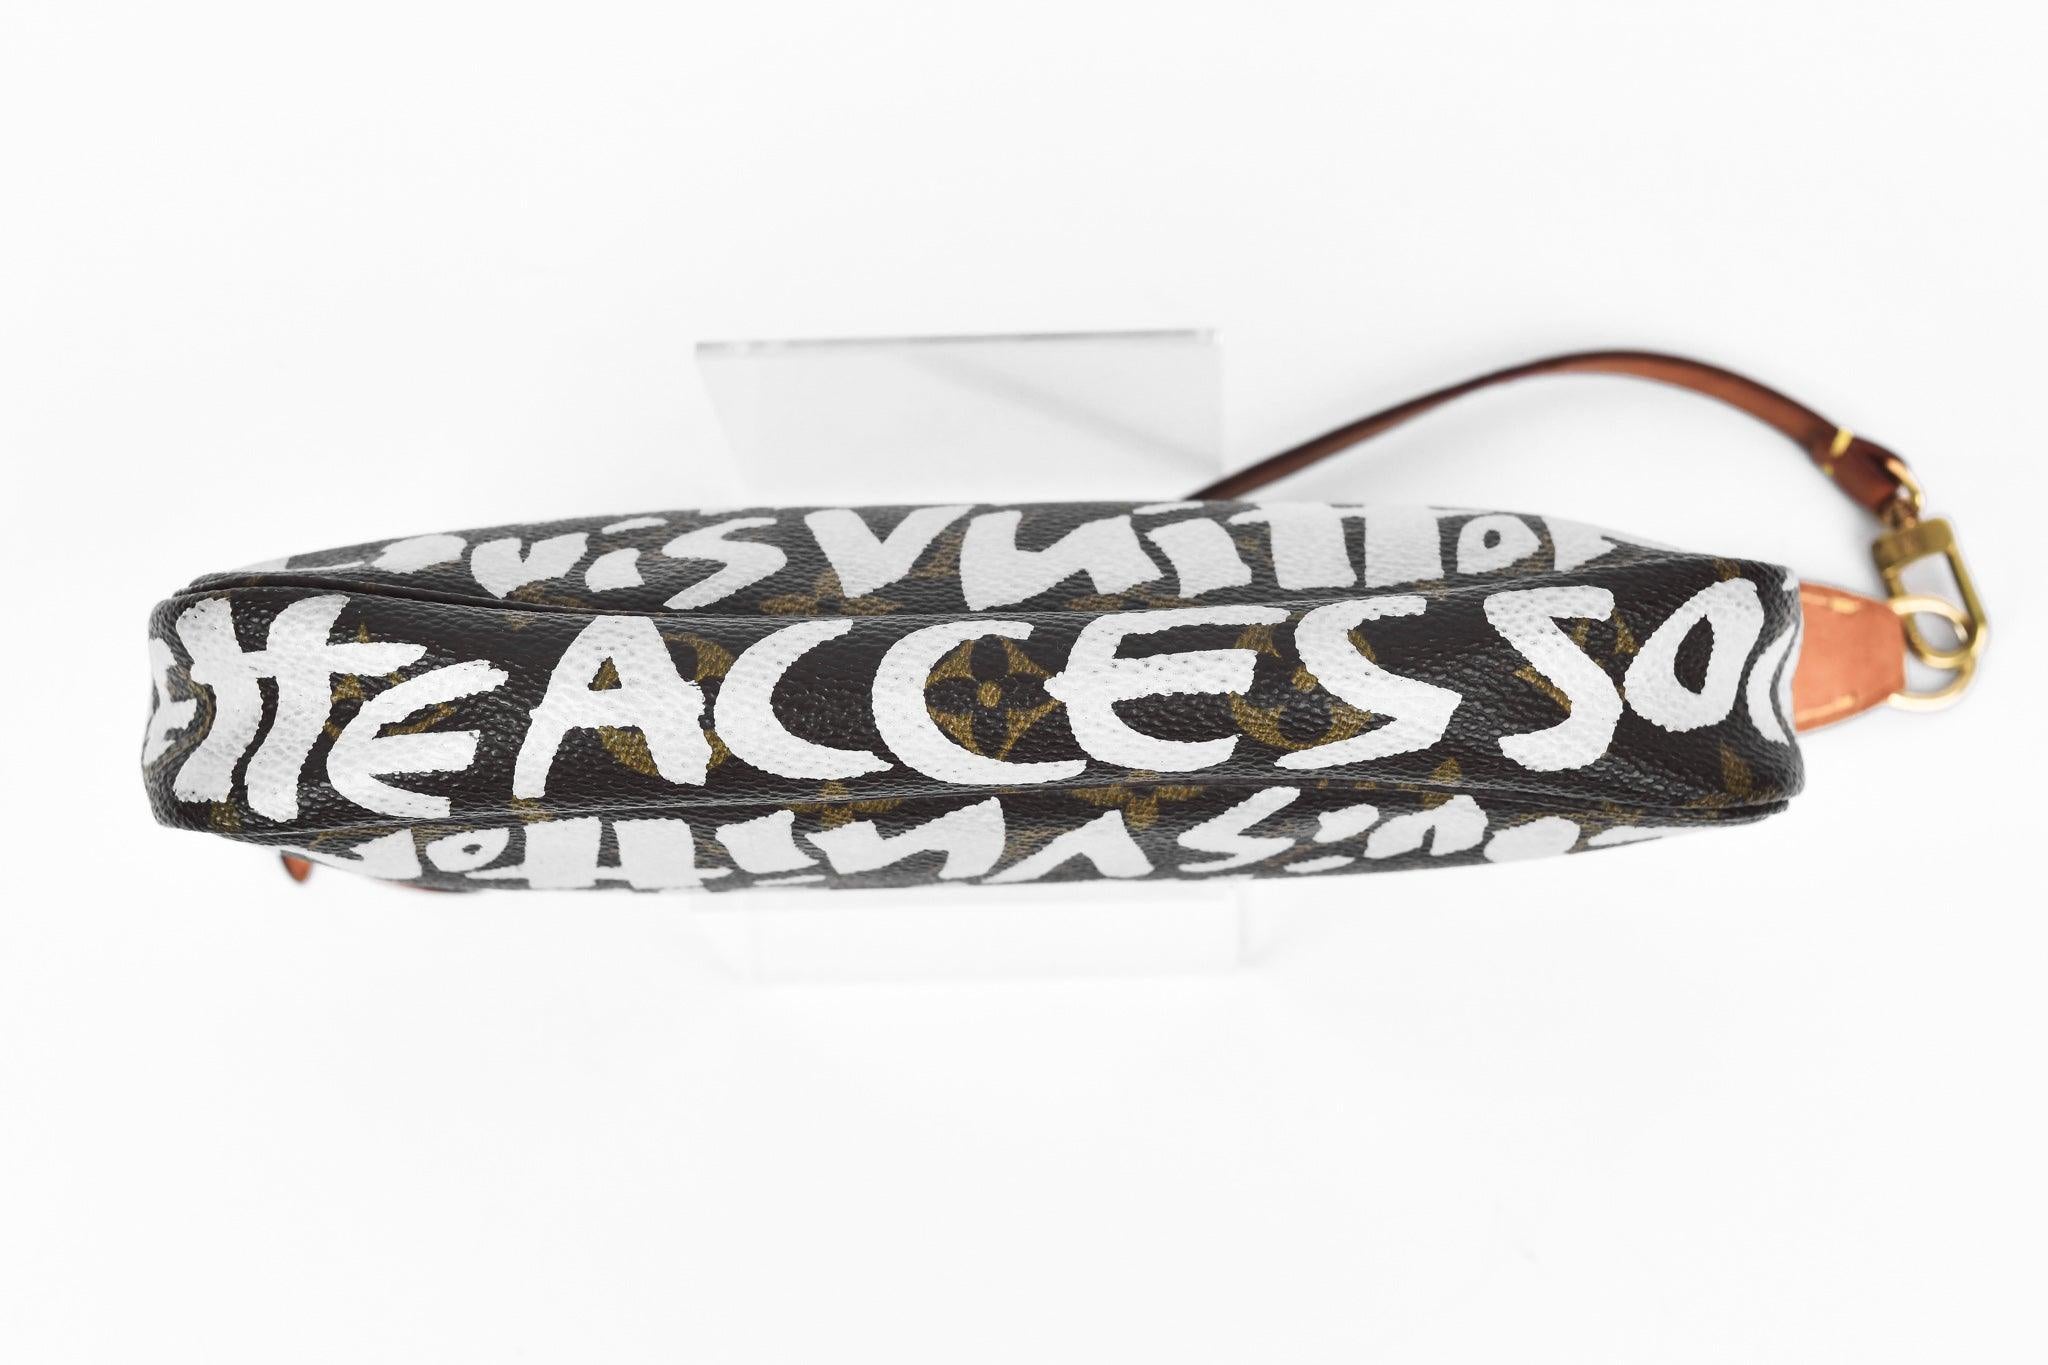 Louis Vuitton (Rare) Stephen Sprouse Graffiti Headband Wristband